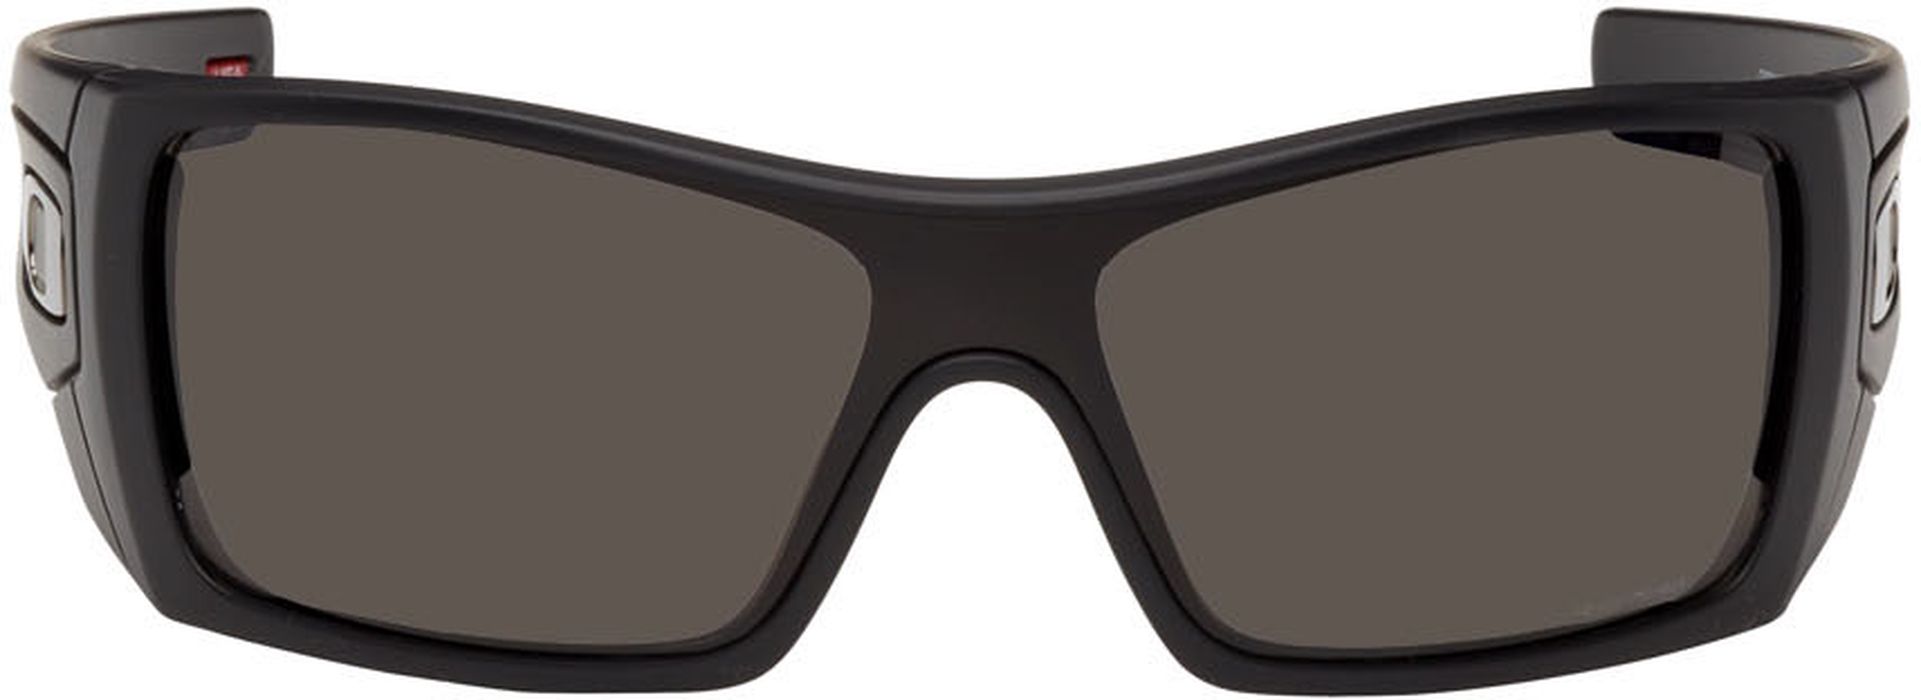 Oakley Black Batwolf Sunglasses